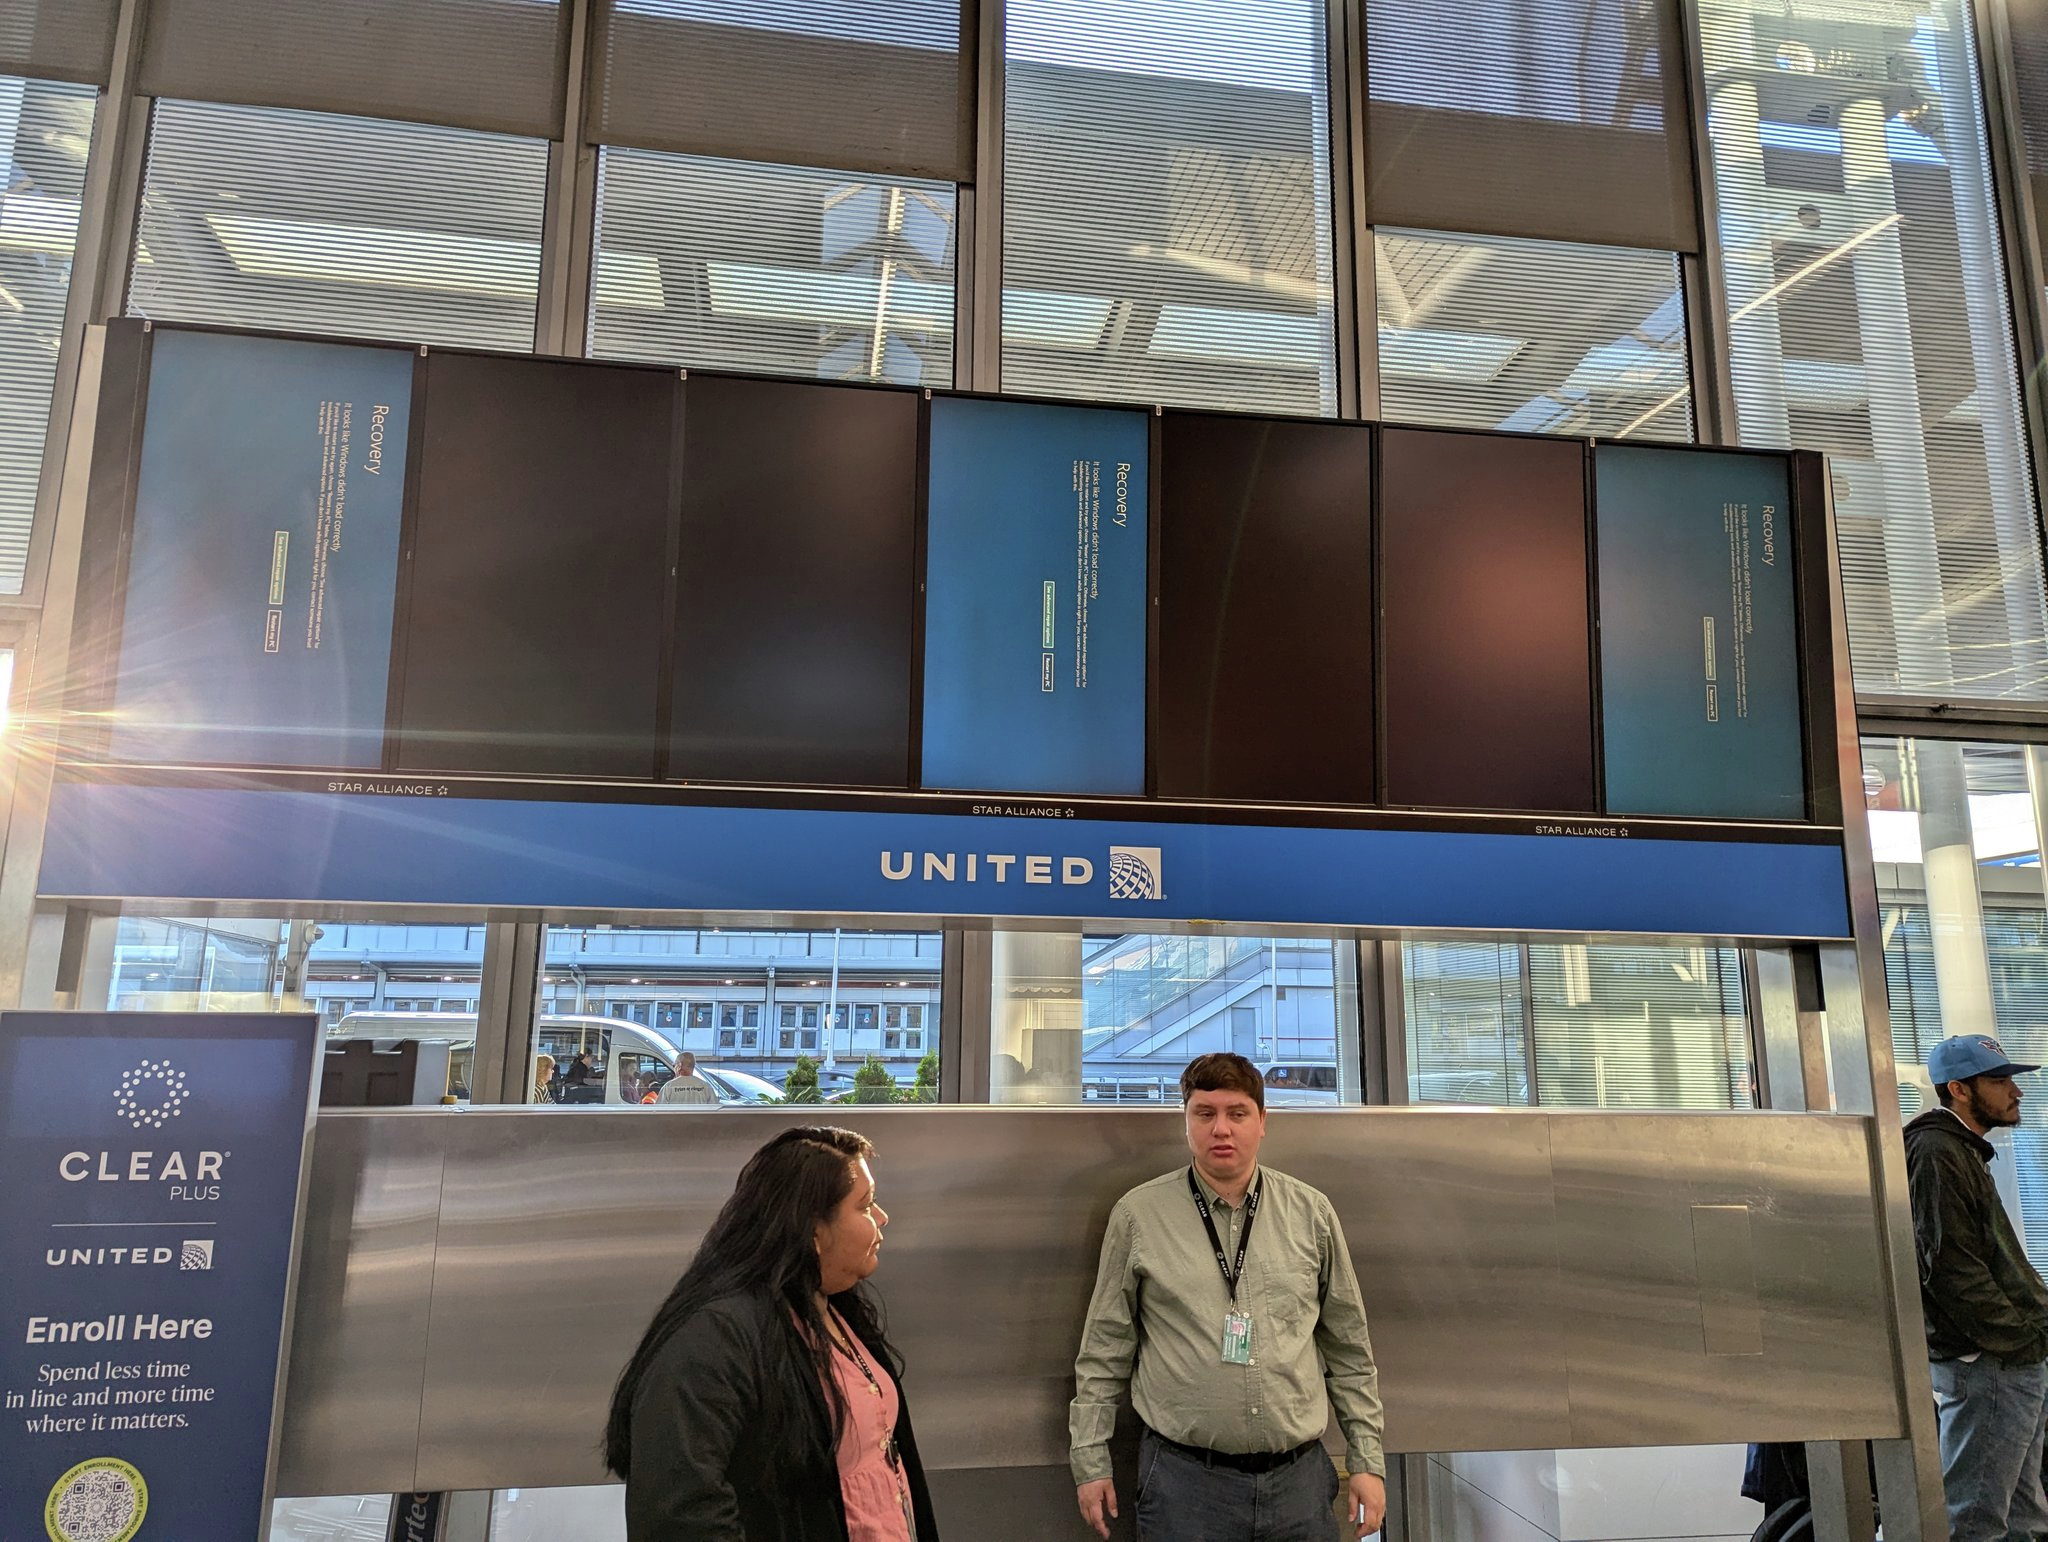 O'Hare Airport screens go dark due to massive internet outage